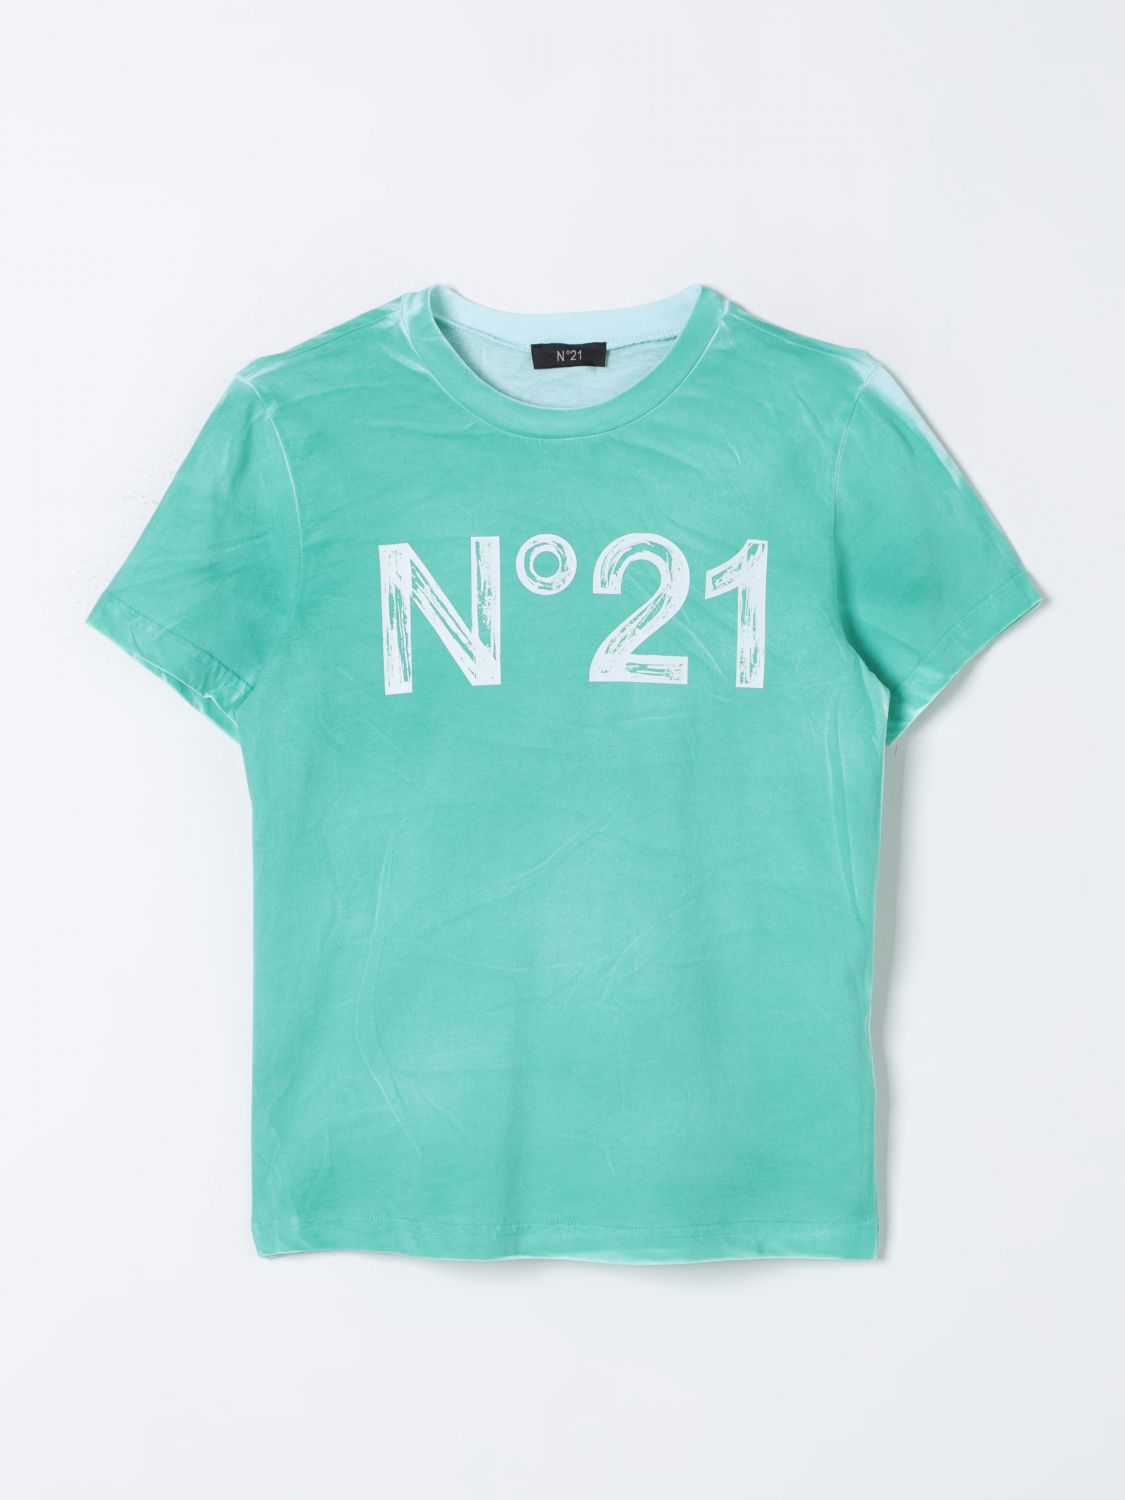 Shop N°21 T-shirt N° 21 Kids Color Green